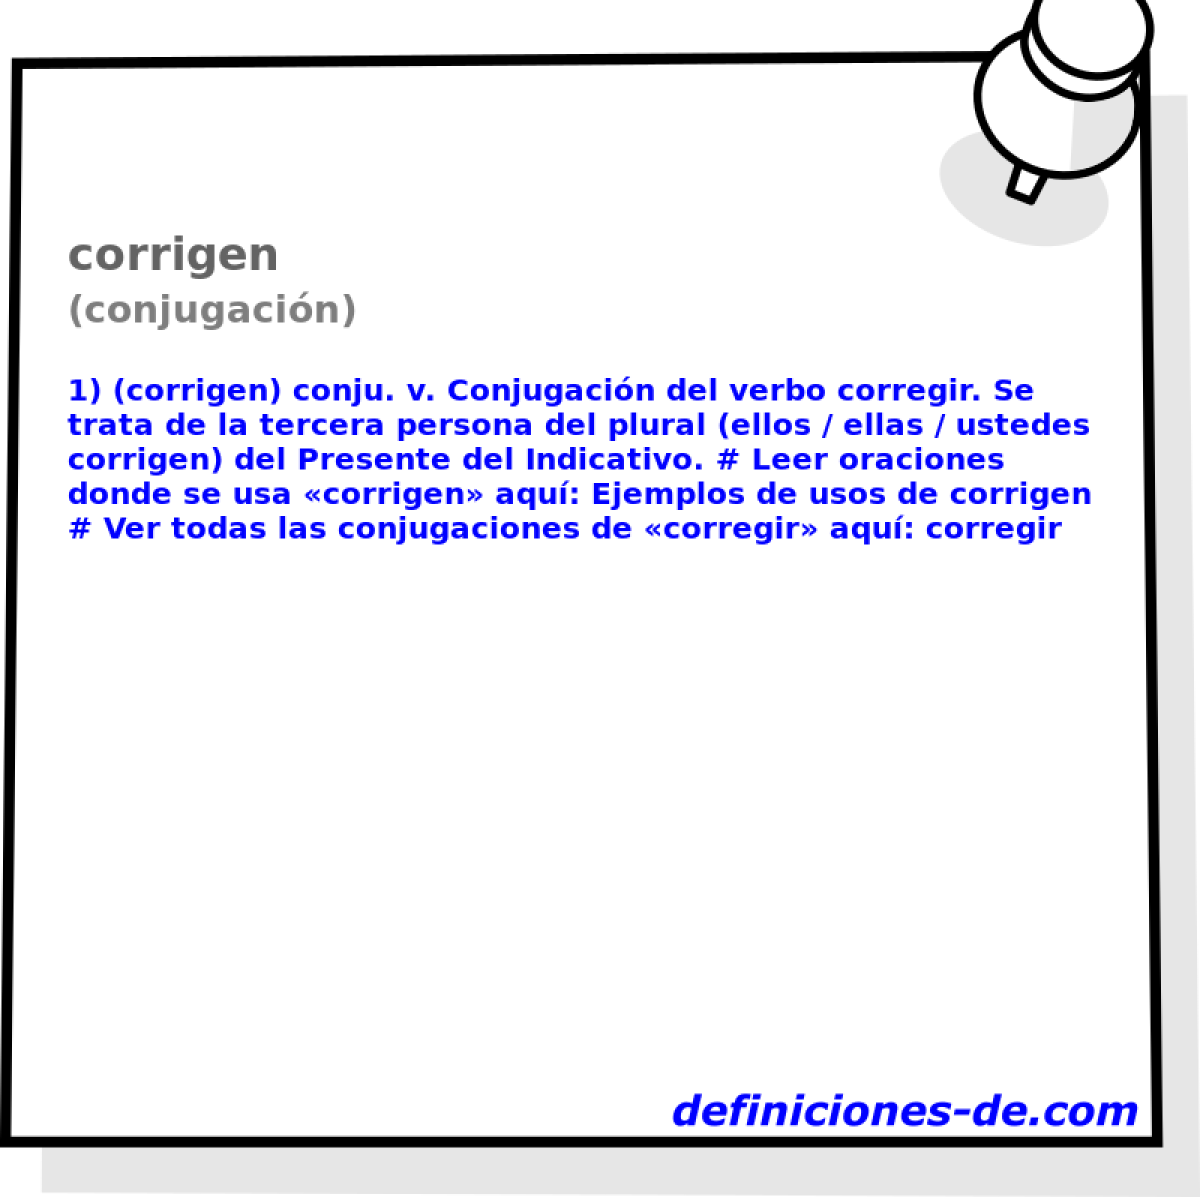 corrigen (conjugacin)